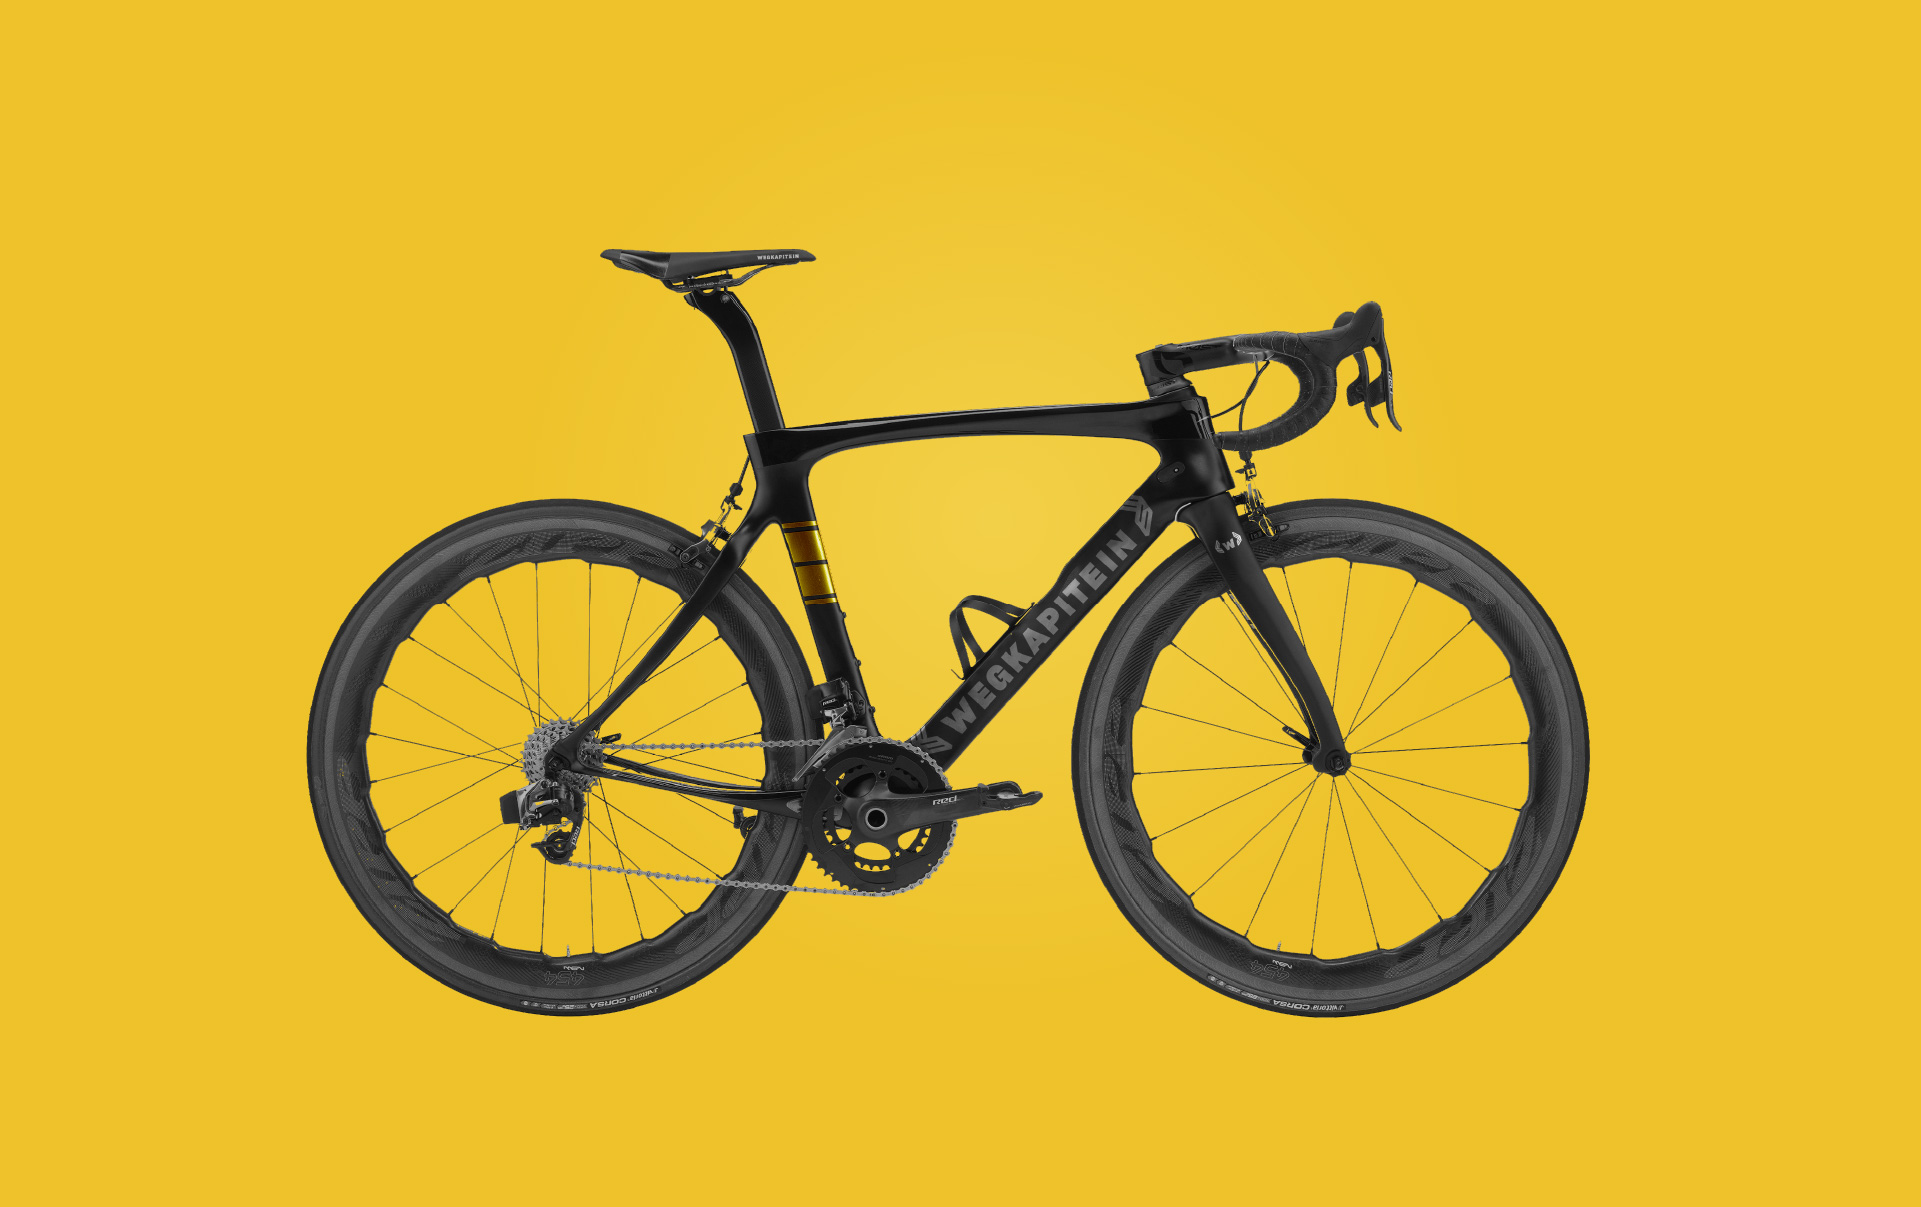 Wegkapitein's branded racing bicycle in black on a yellow background